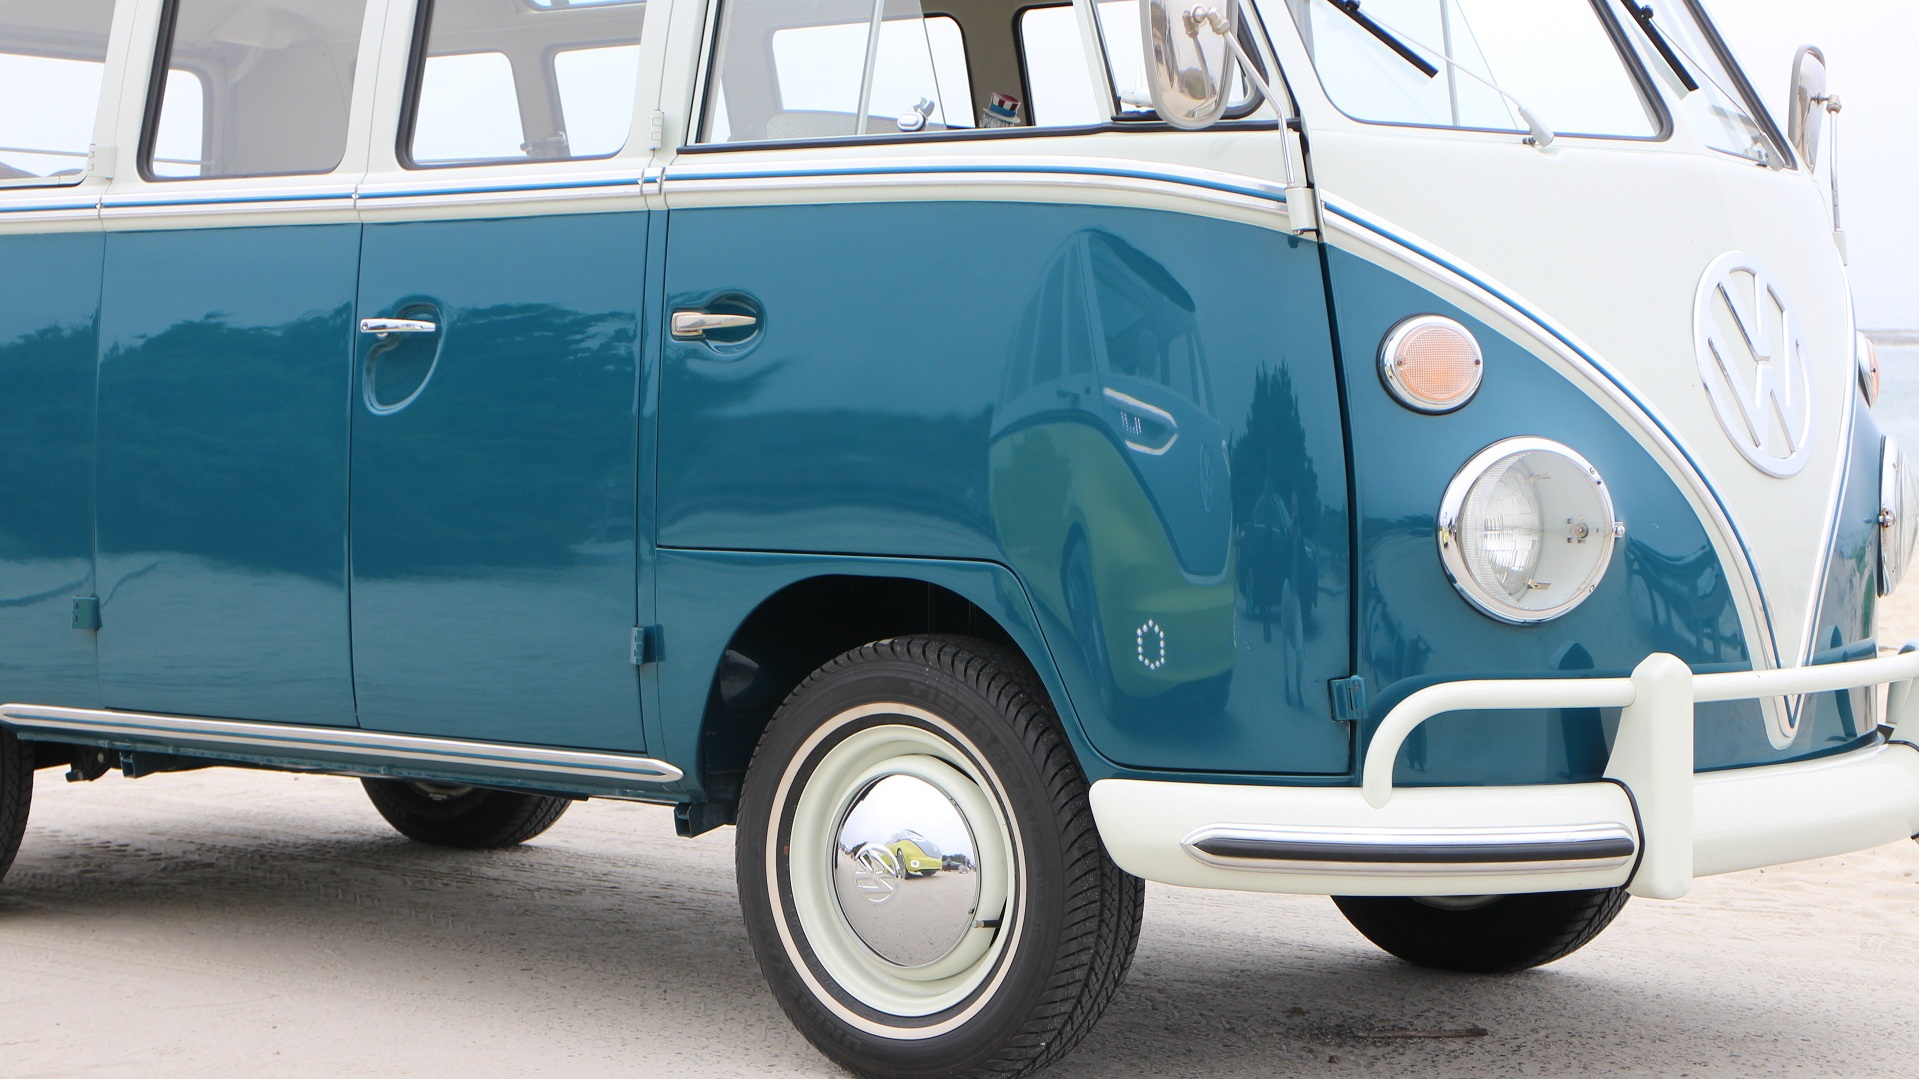 VW Bus – Evolution of the Volkswagen ID. Buzz - Timeline & Photos